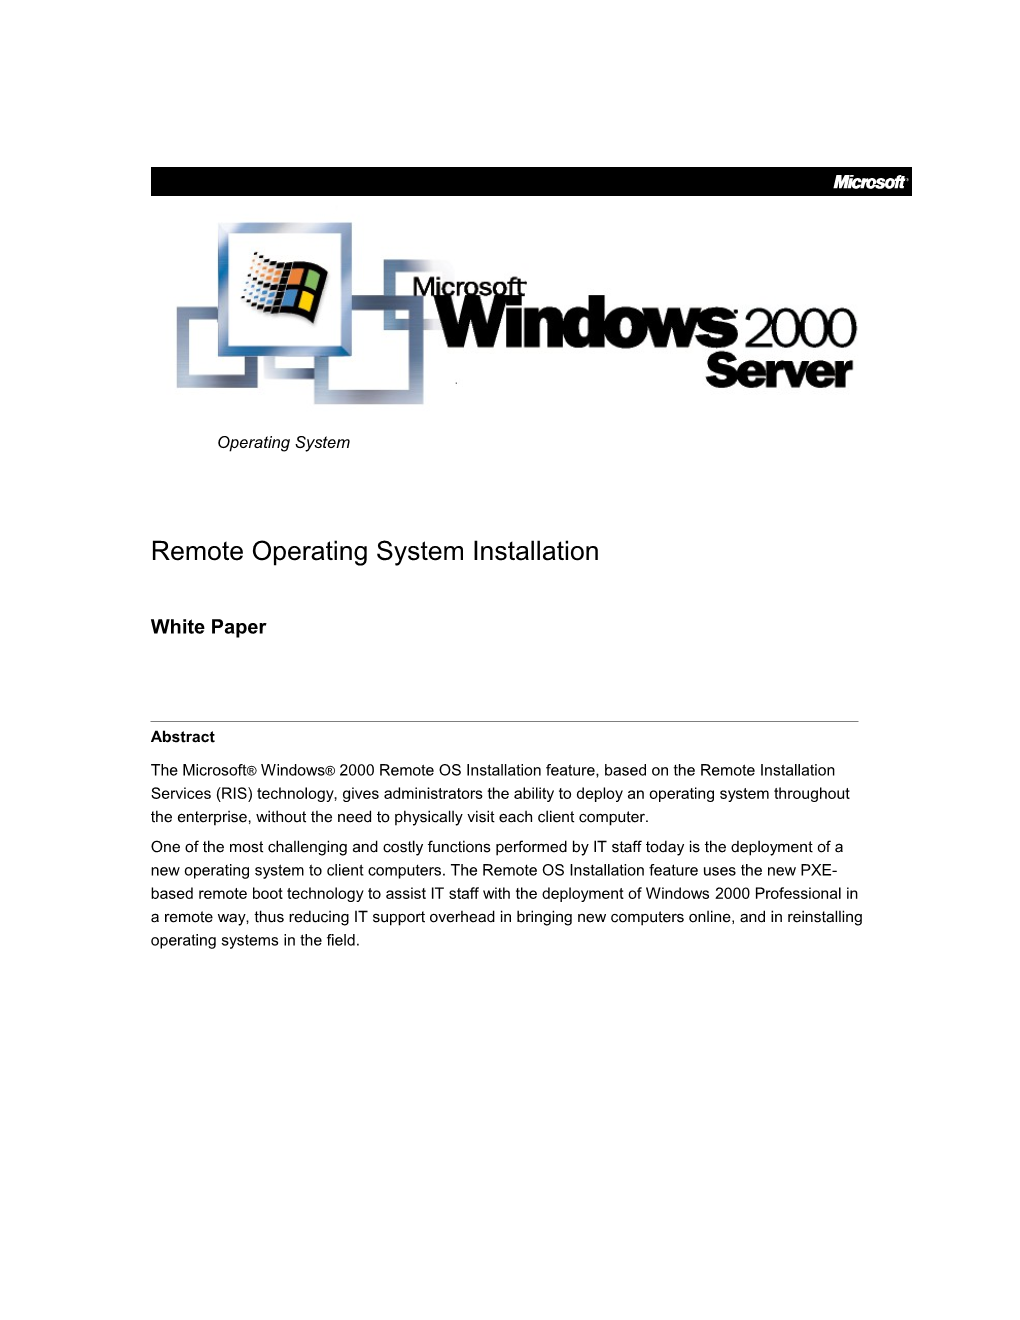 Windows 2000 Remote OS Installation White Paper